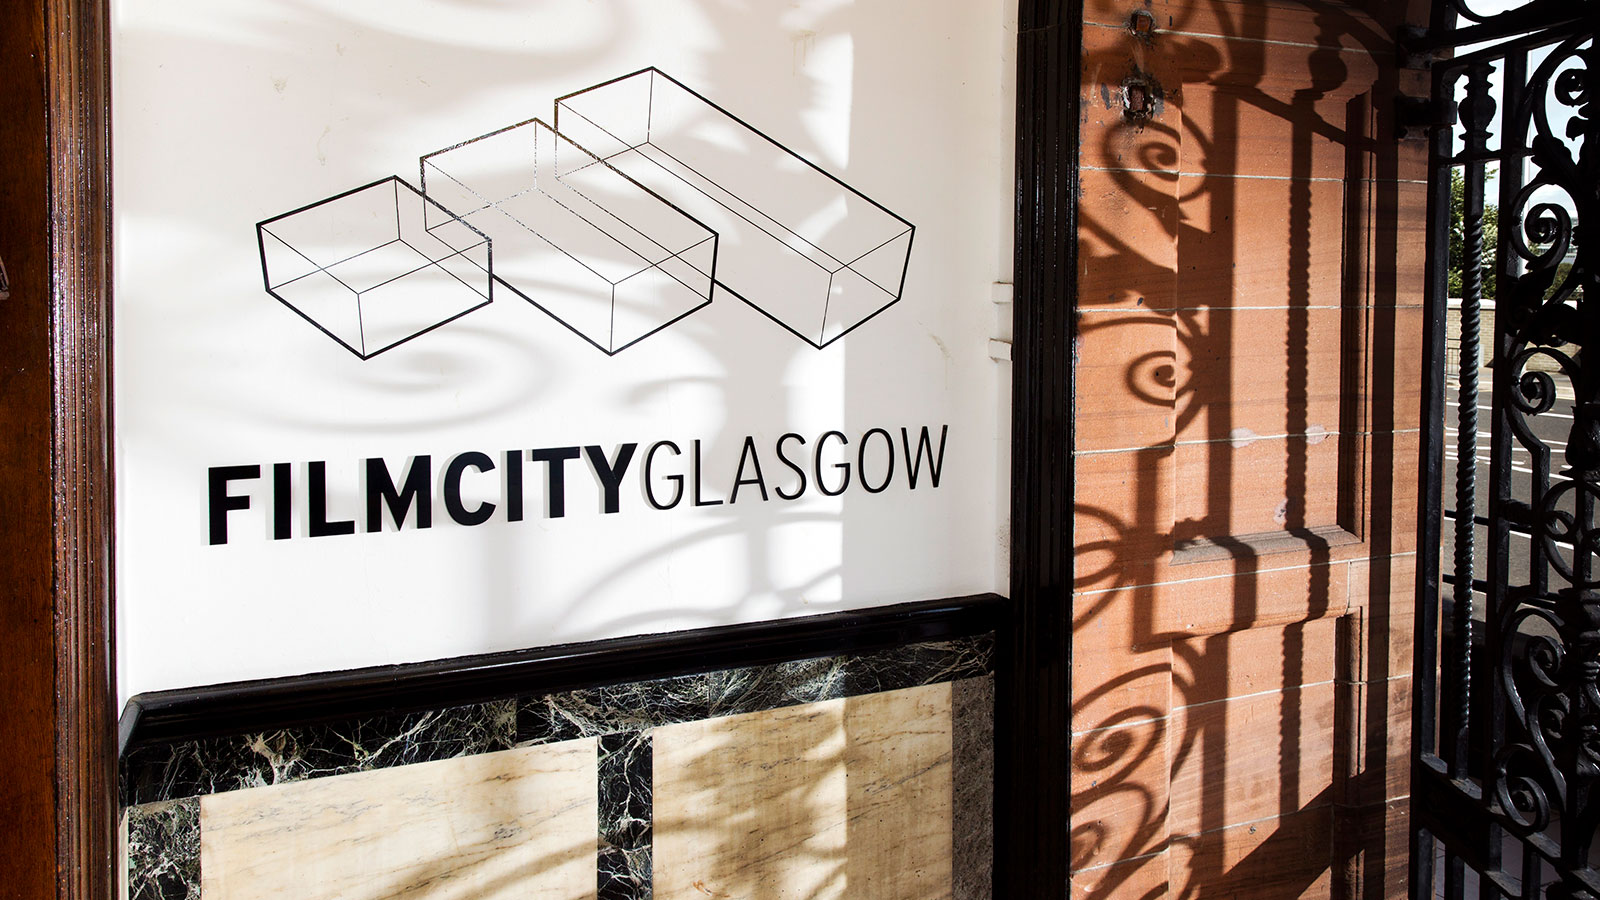 Exterior of Film City Glasgow